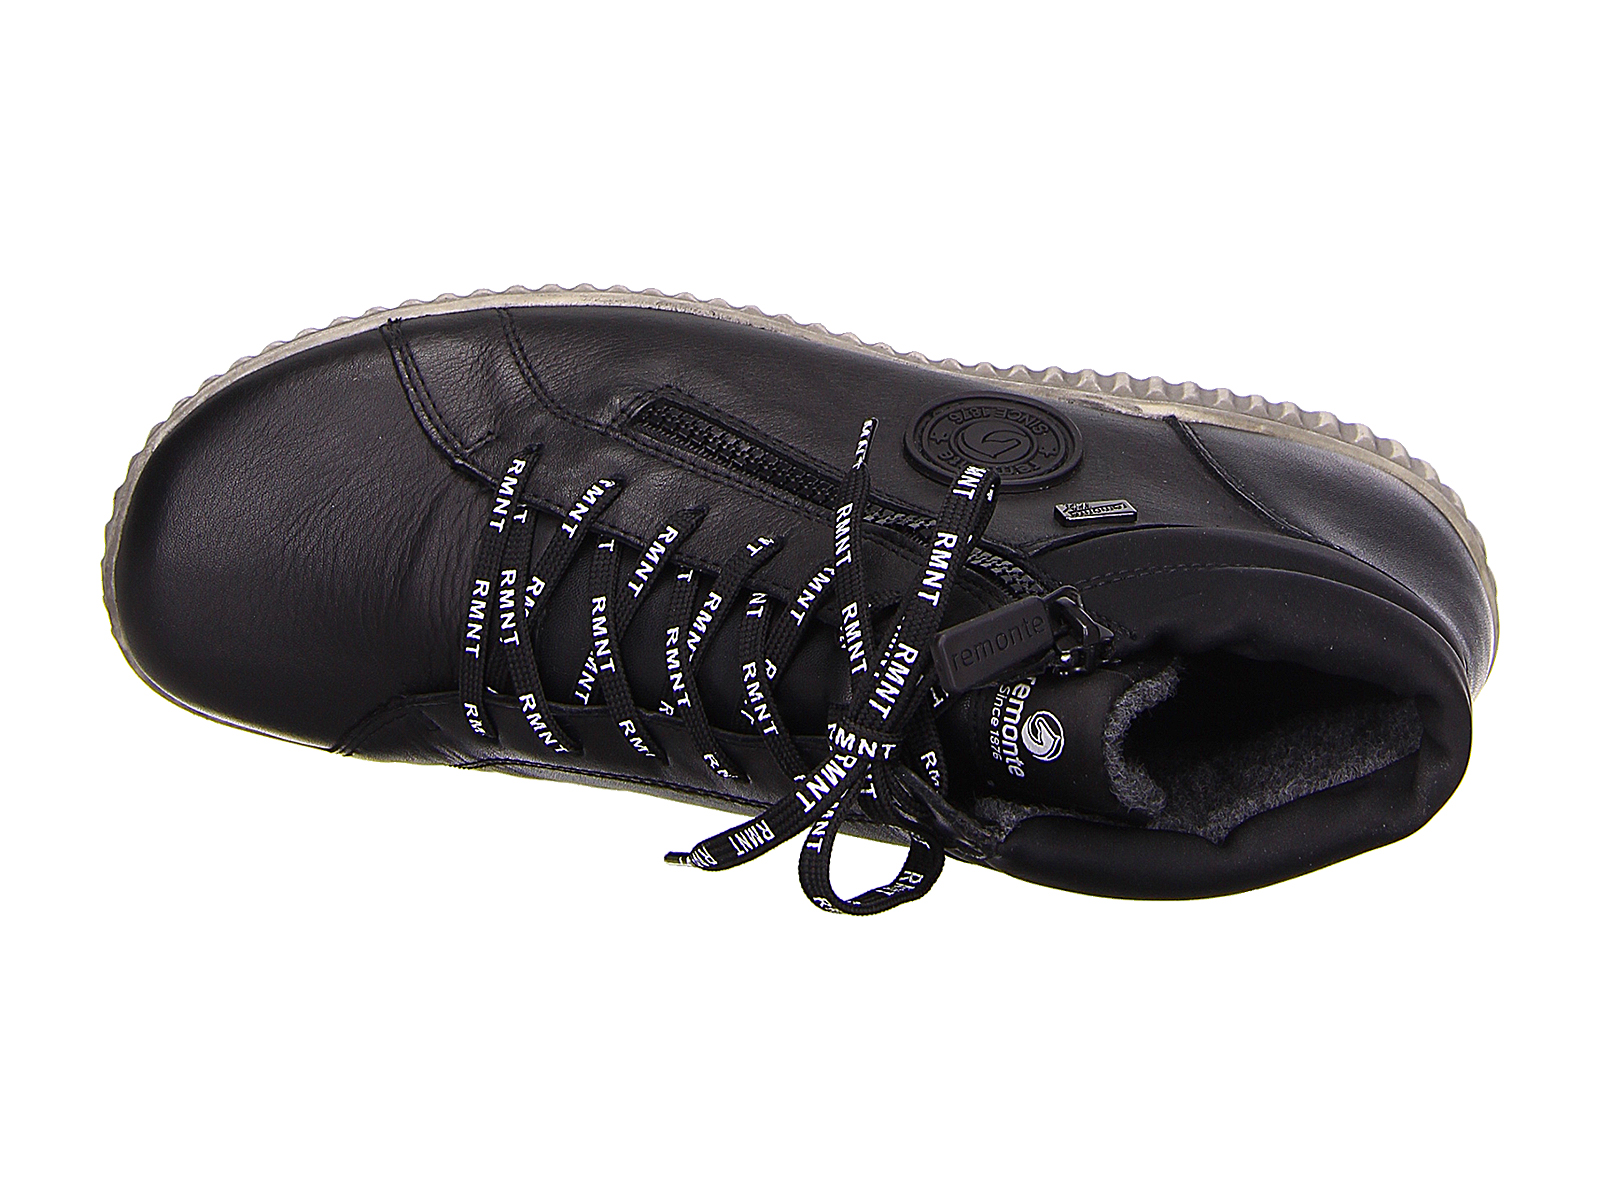 Remonte Sneaker R8272-01